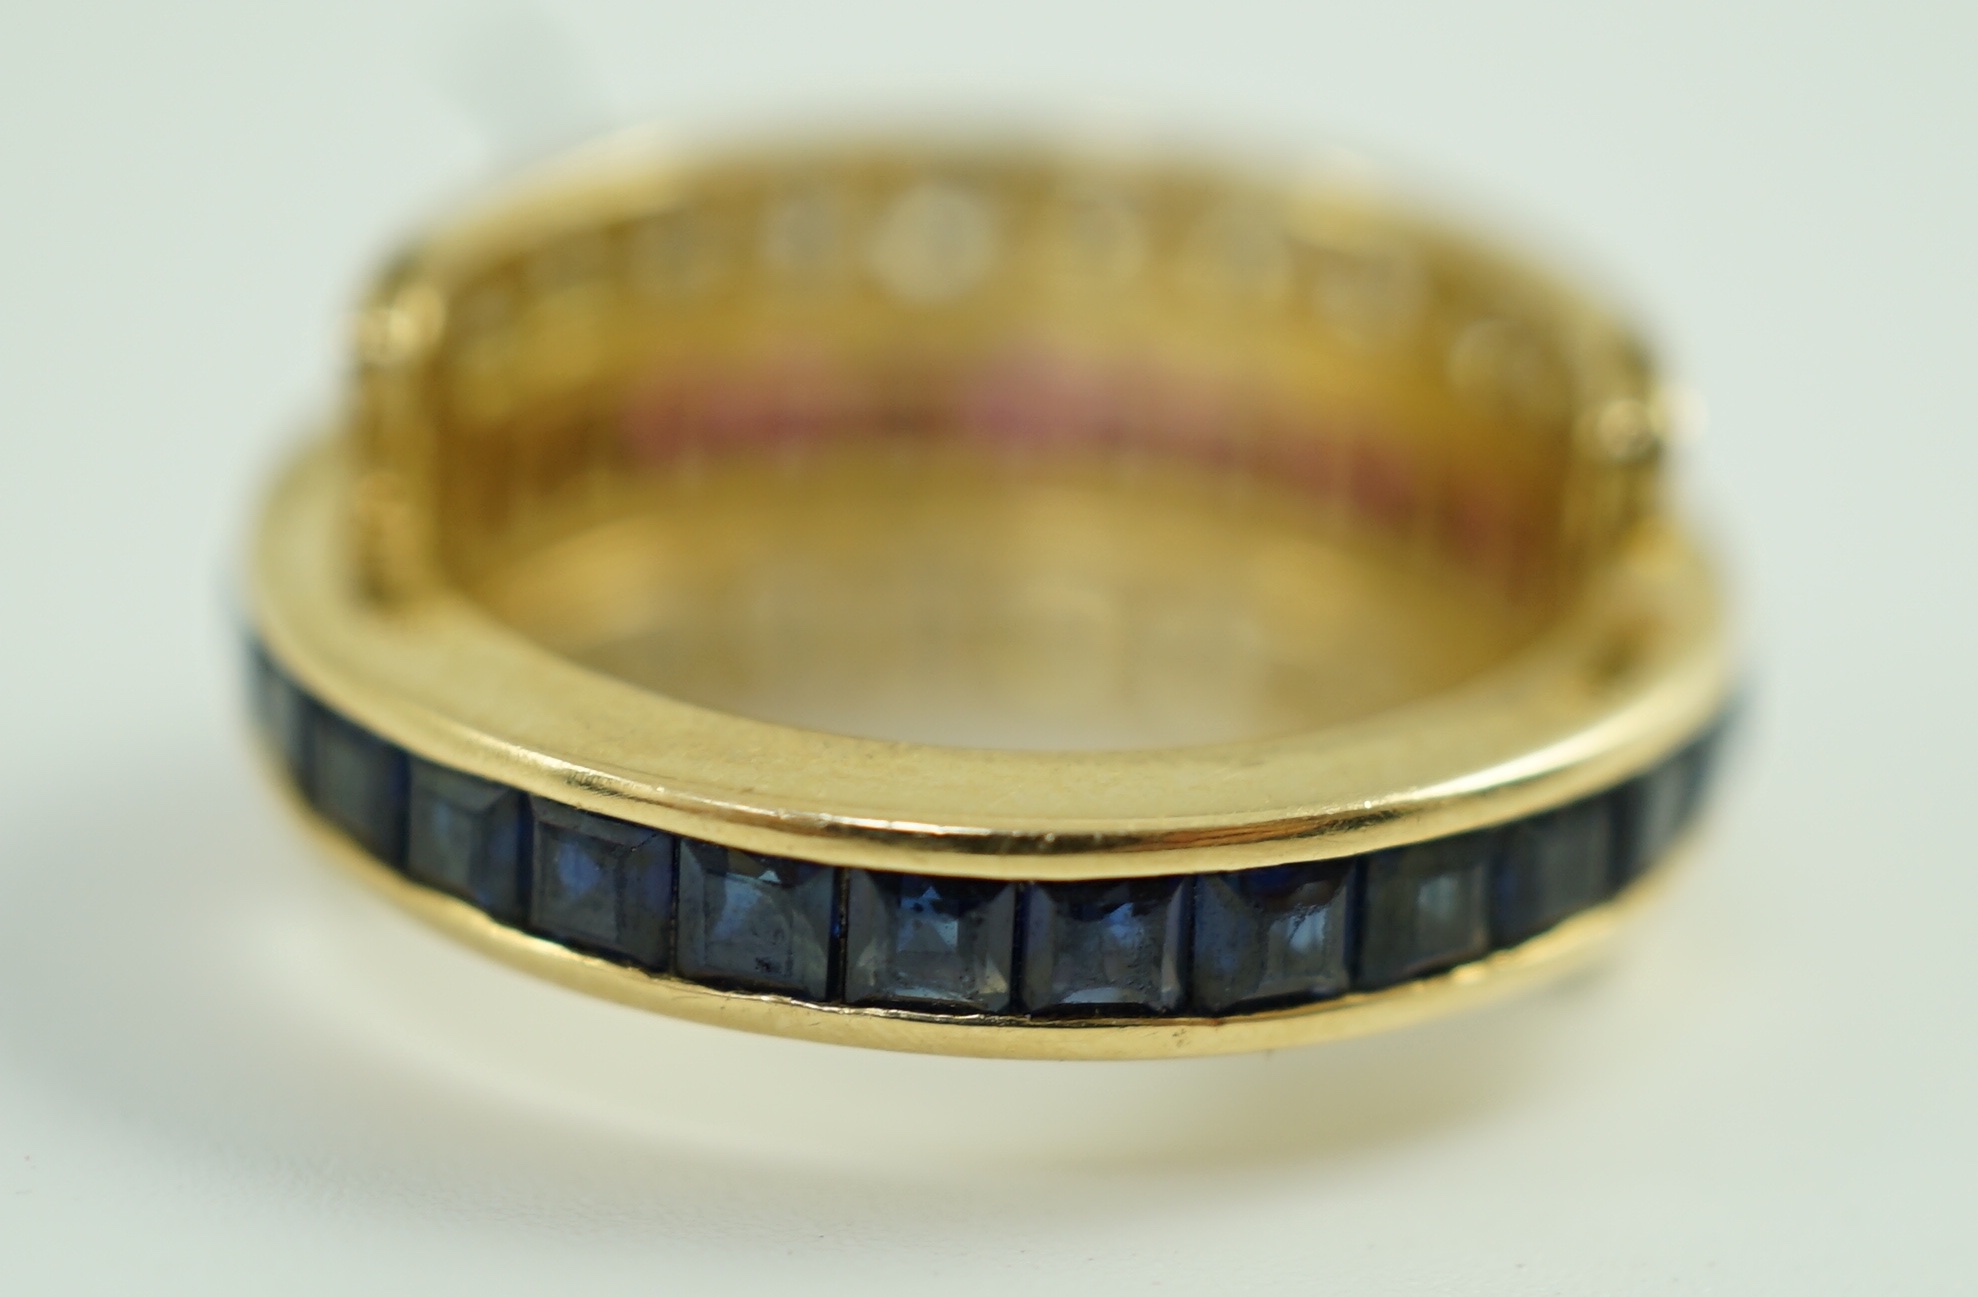 An 18k gold, ruby, sapphire and diamond set triple band swivel ring